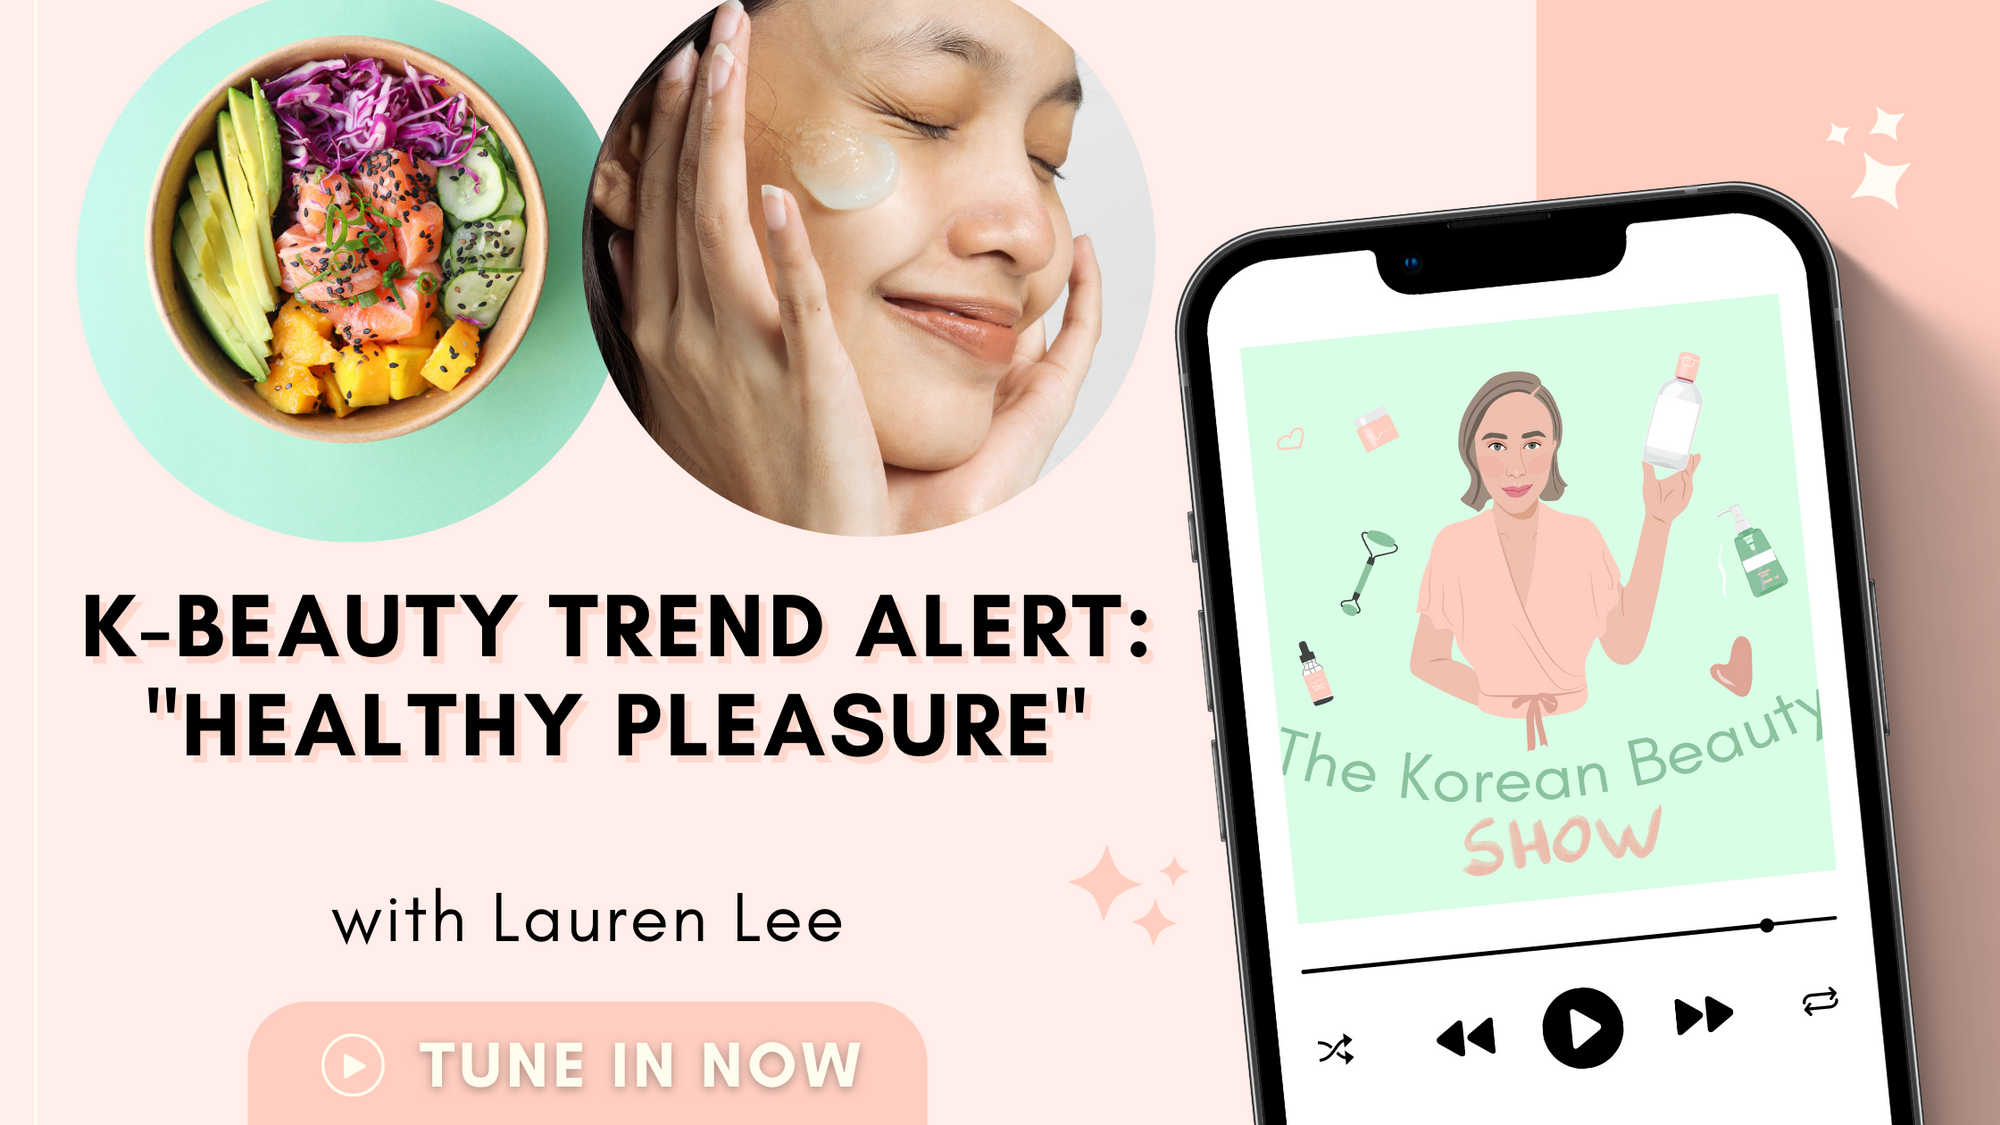 K-Beauty Trend Alert: "Healthy Pleasure"